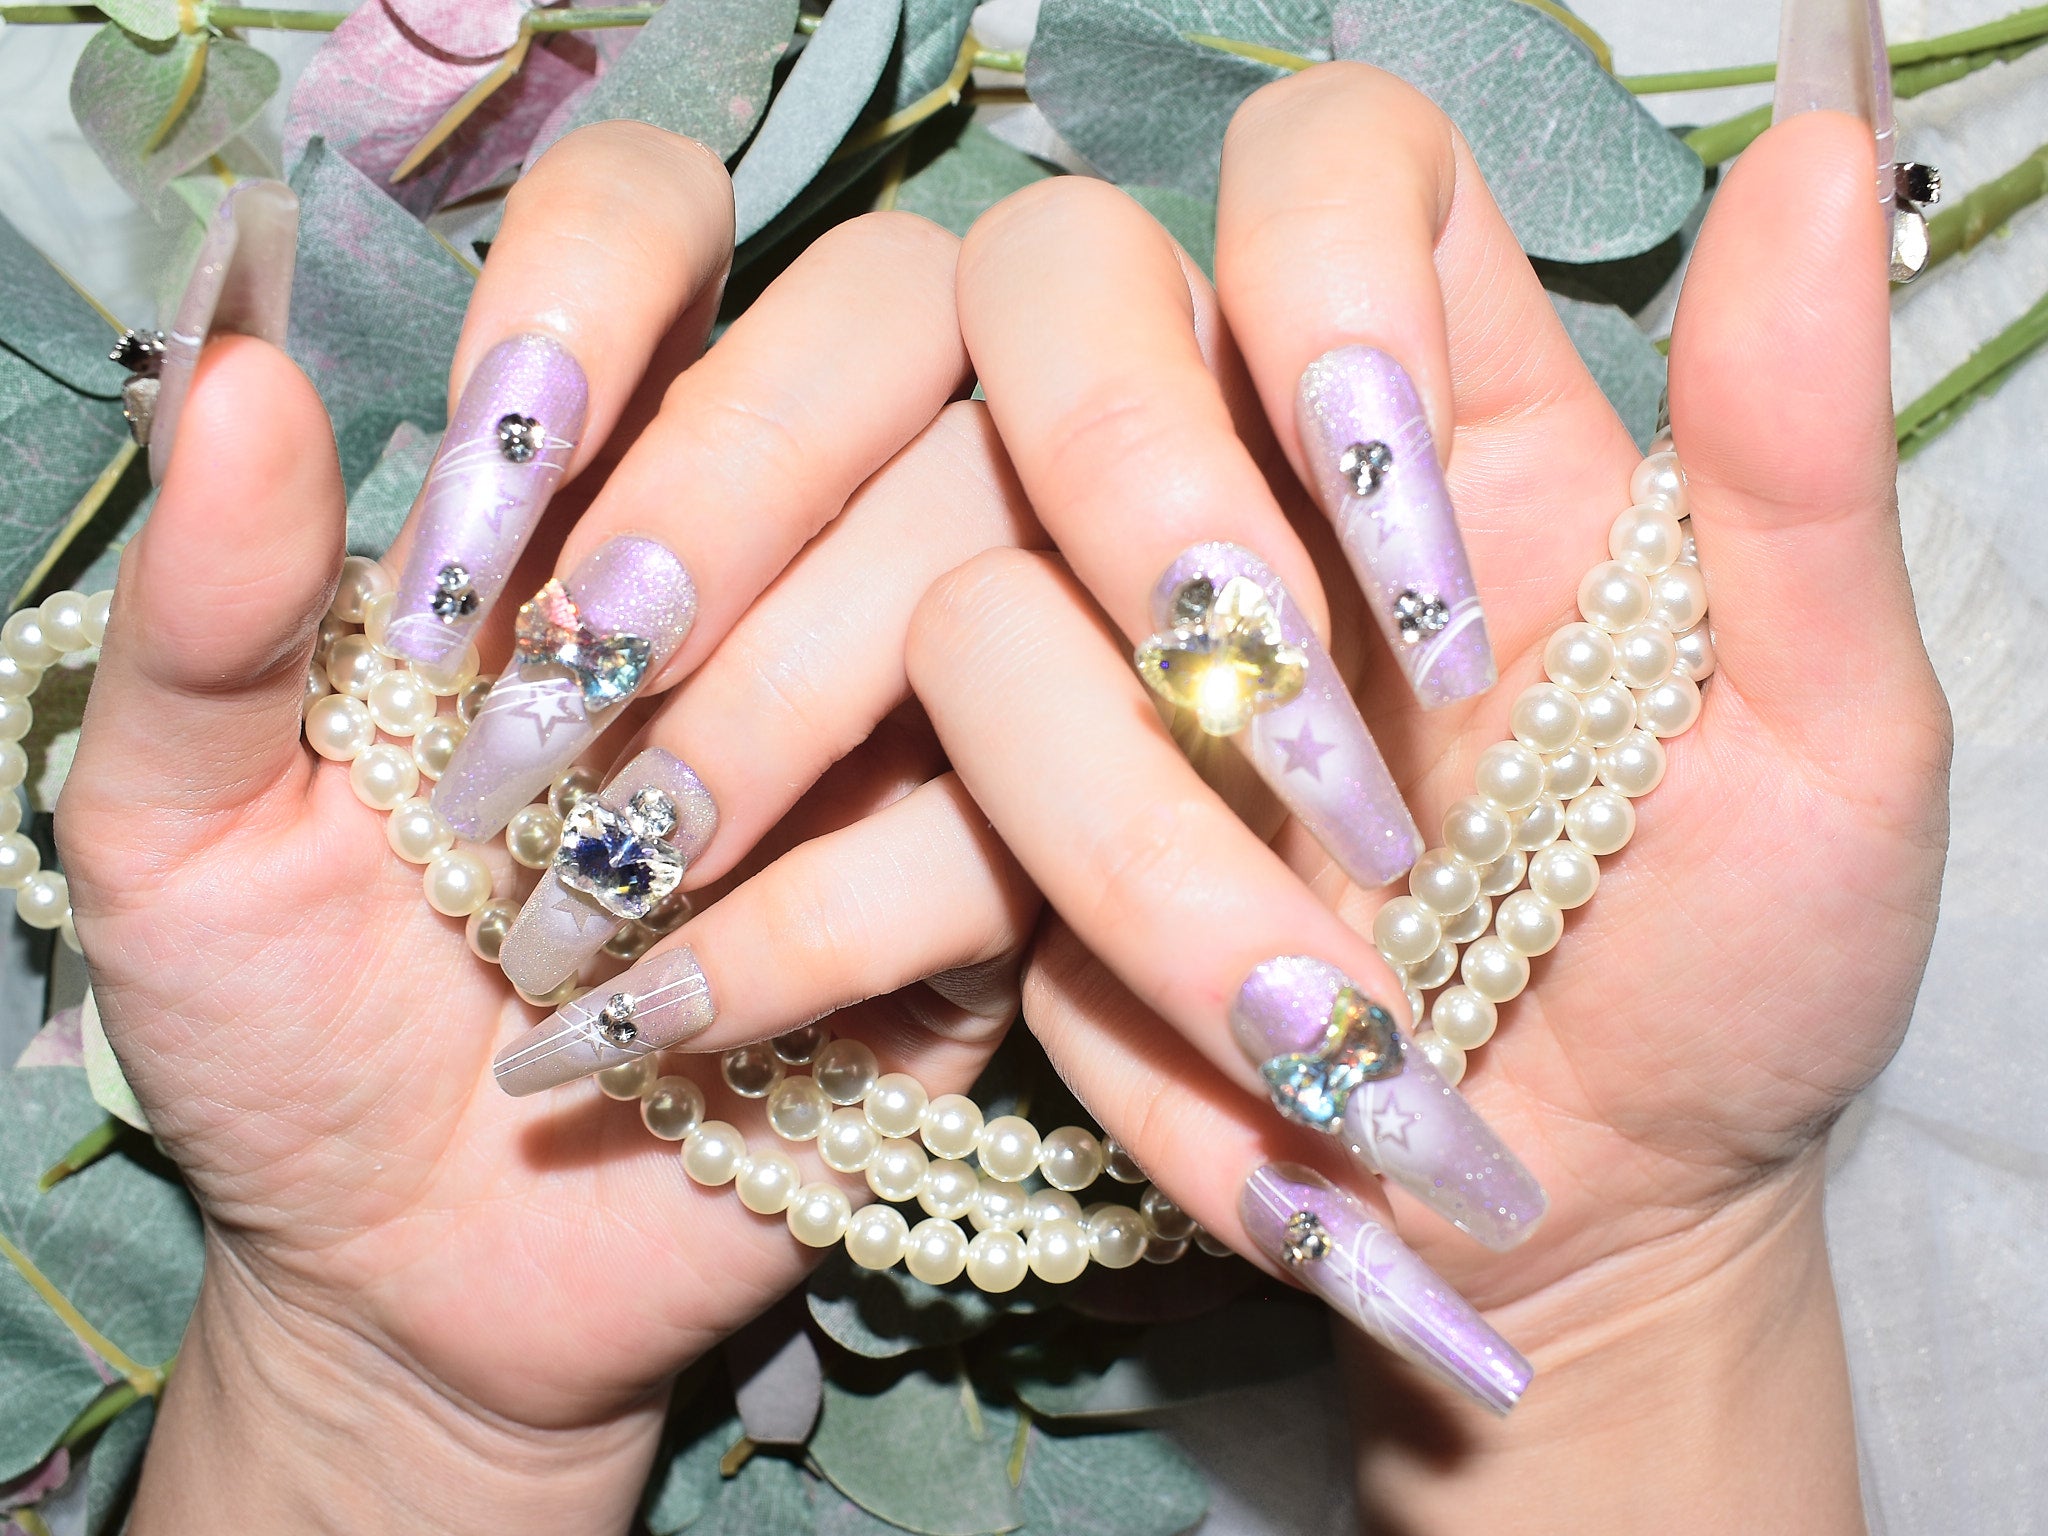 light purple nail varnish, nails with stars, bow press on nails, handmade press on nails, monoschic nails